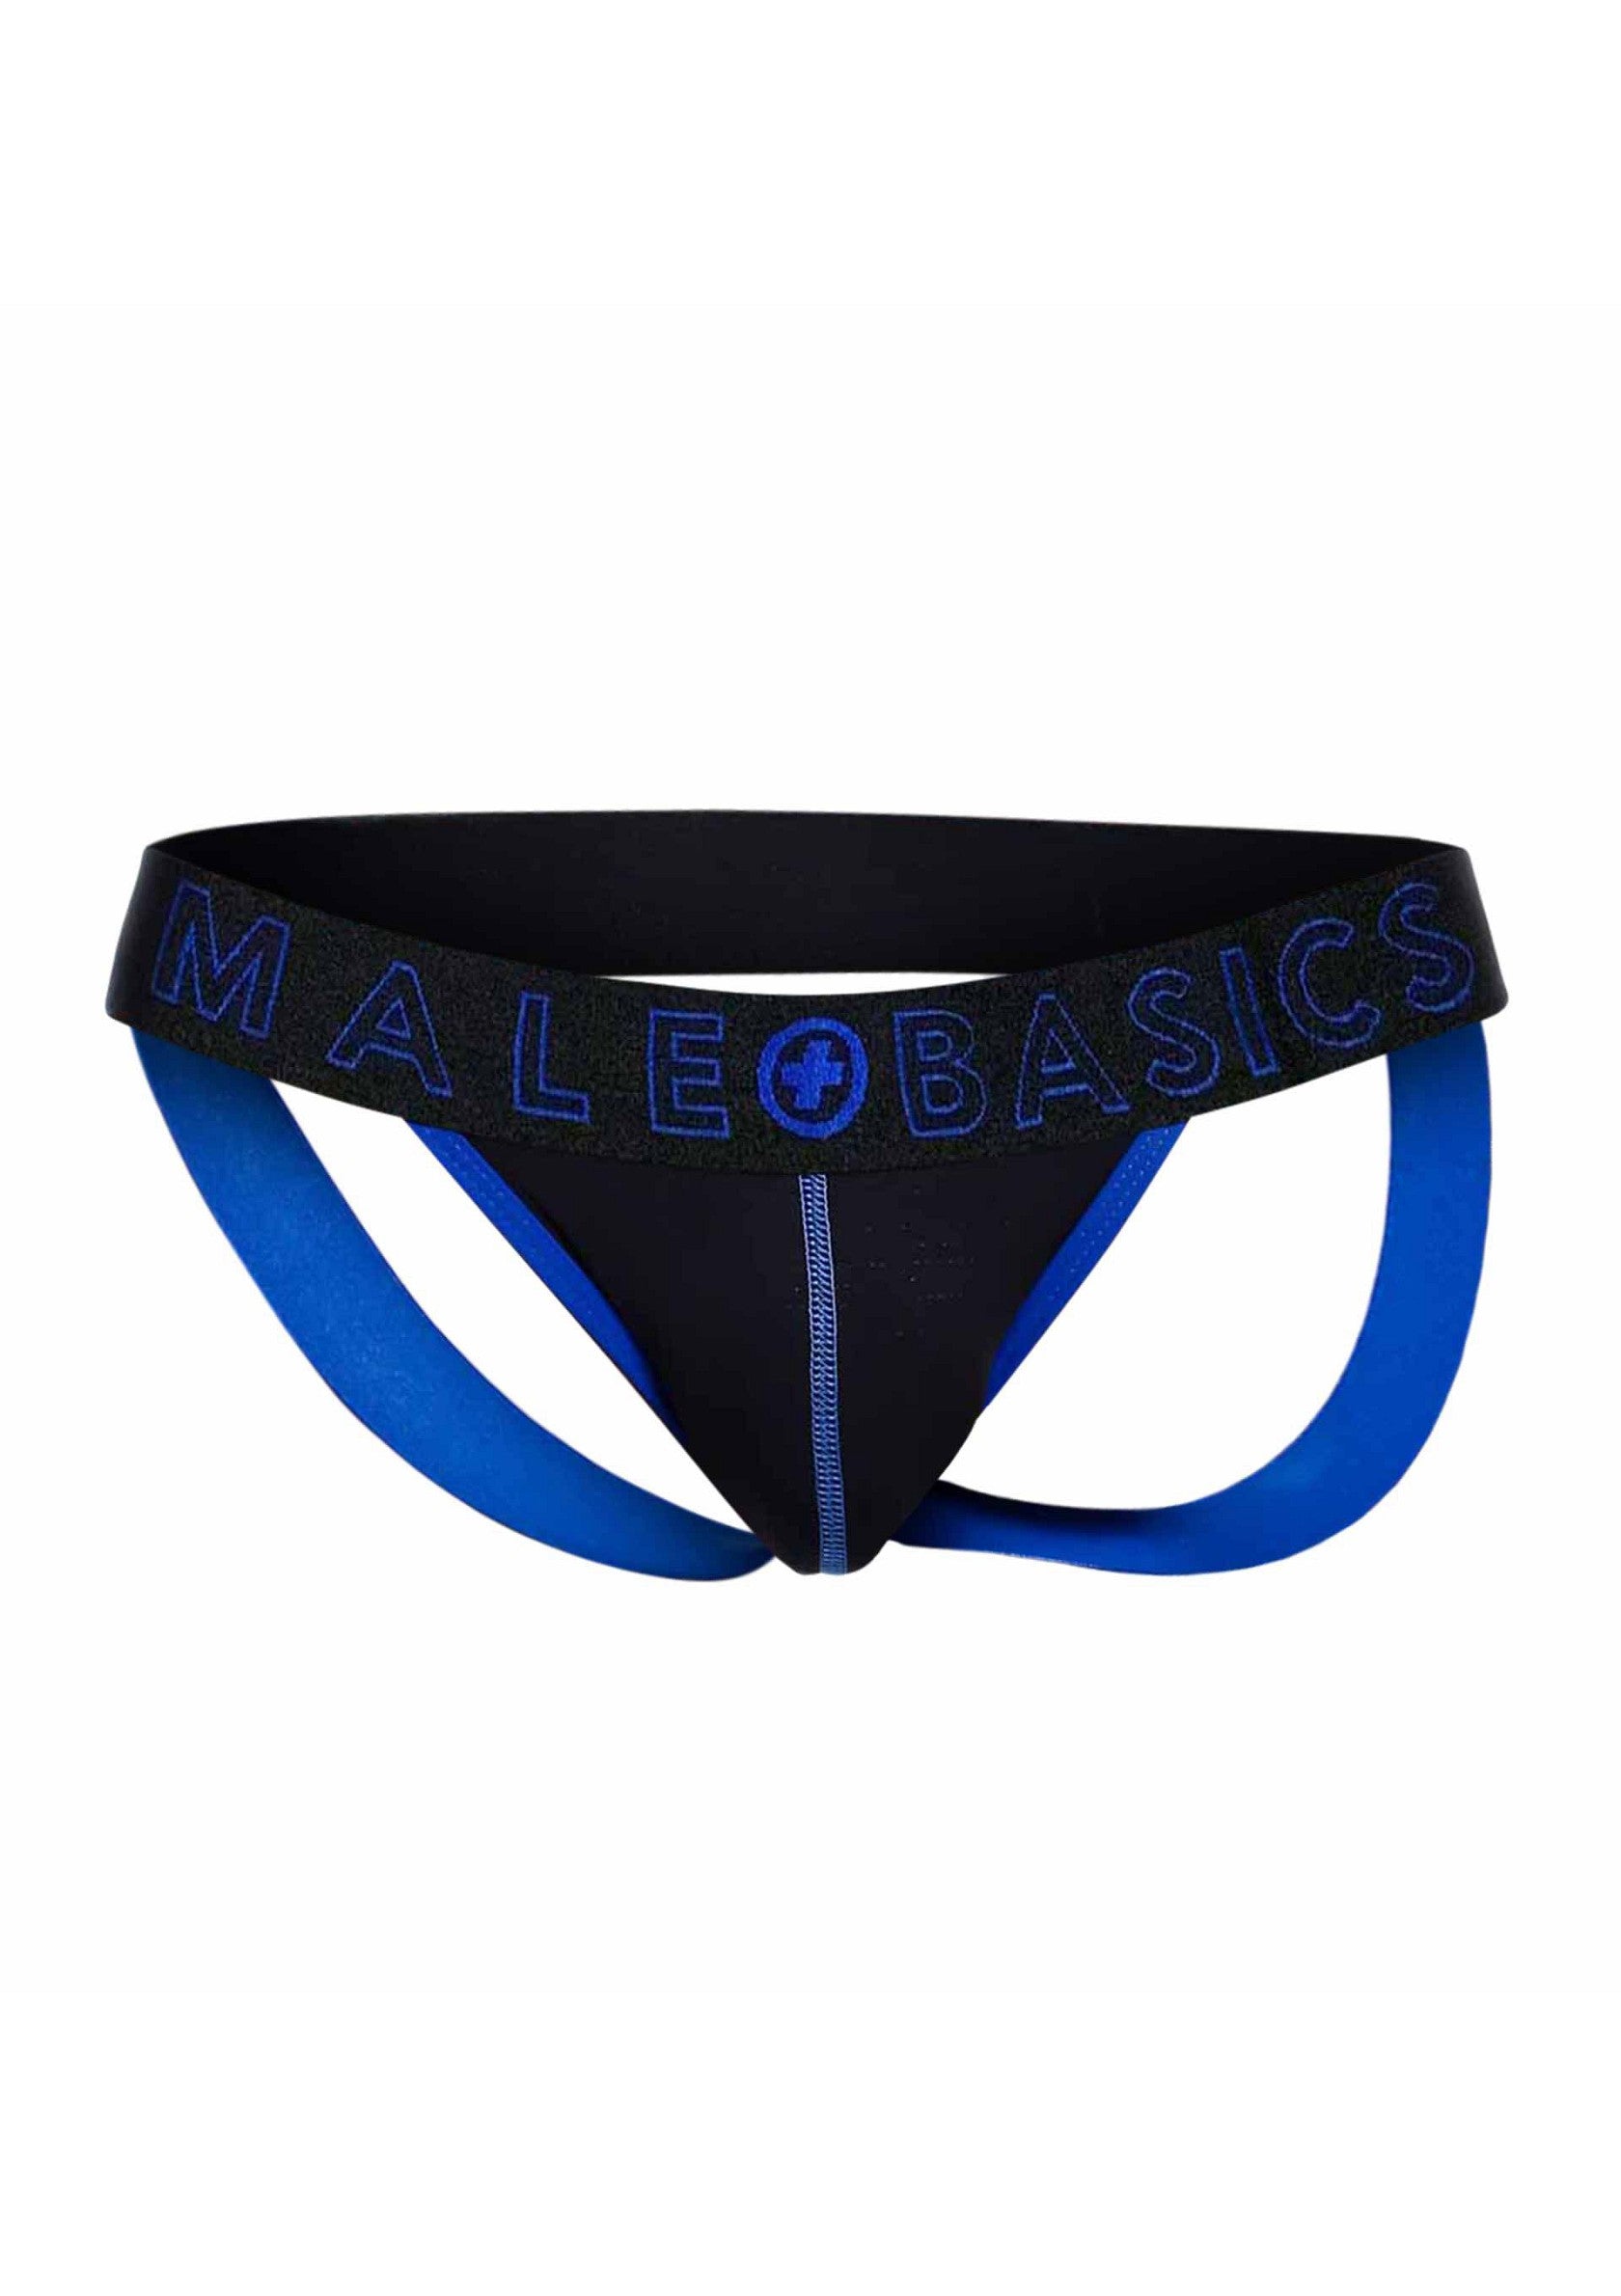 MaleBasics Neon Jock BLUE S - 9